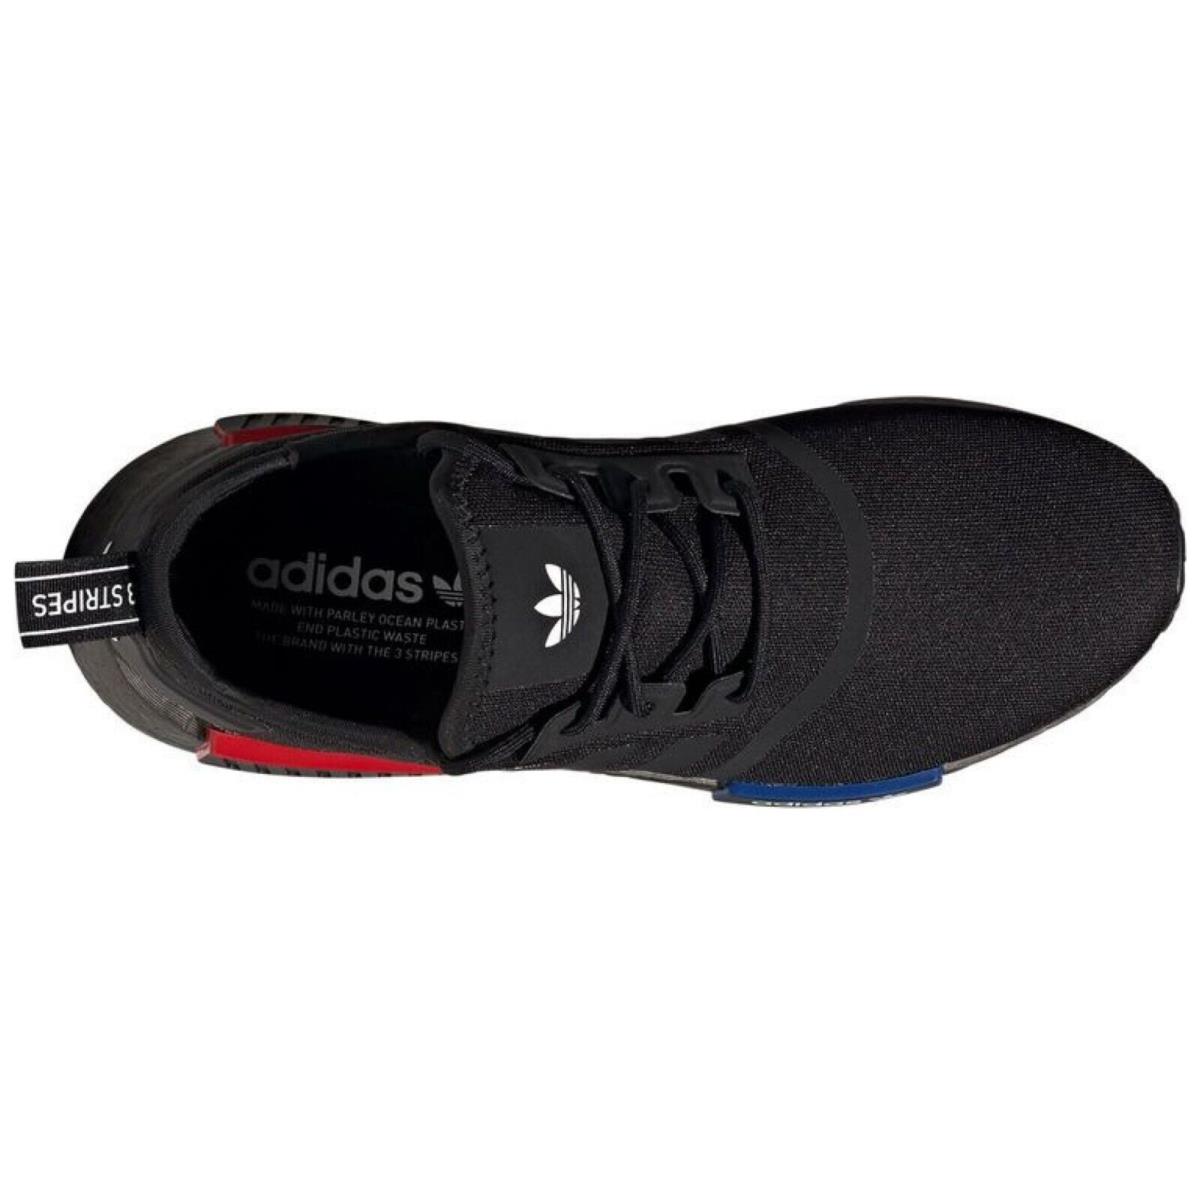 Adidas shoes Originals - Black , BLACK/BLACK/GREY Manufacturer 3